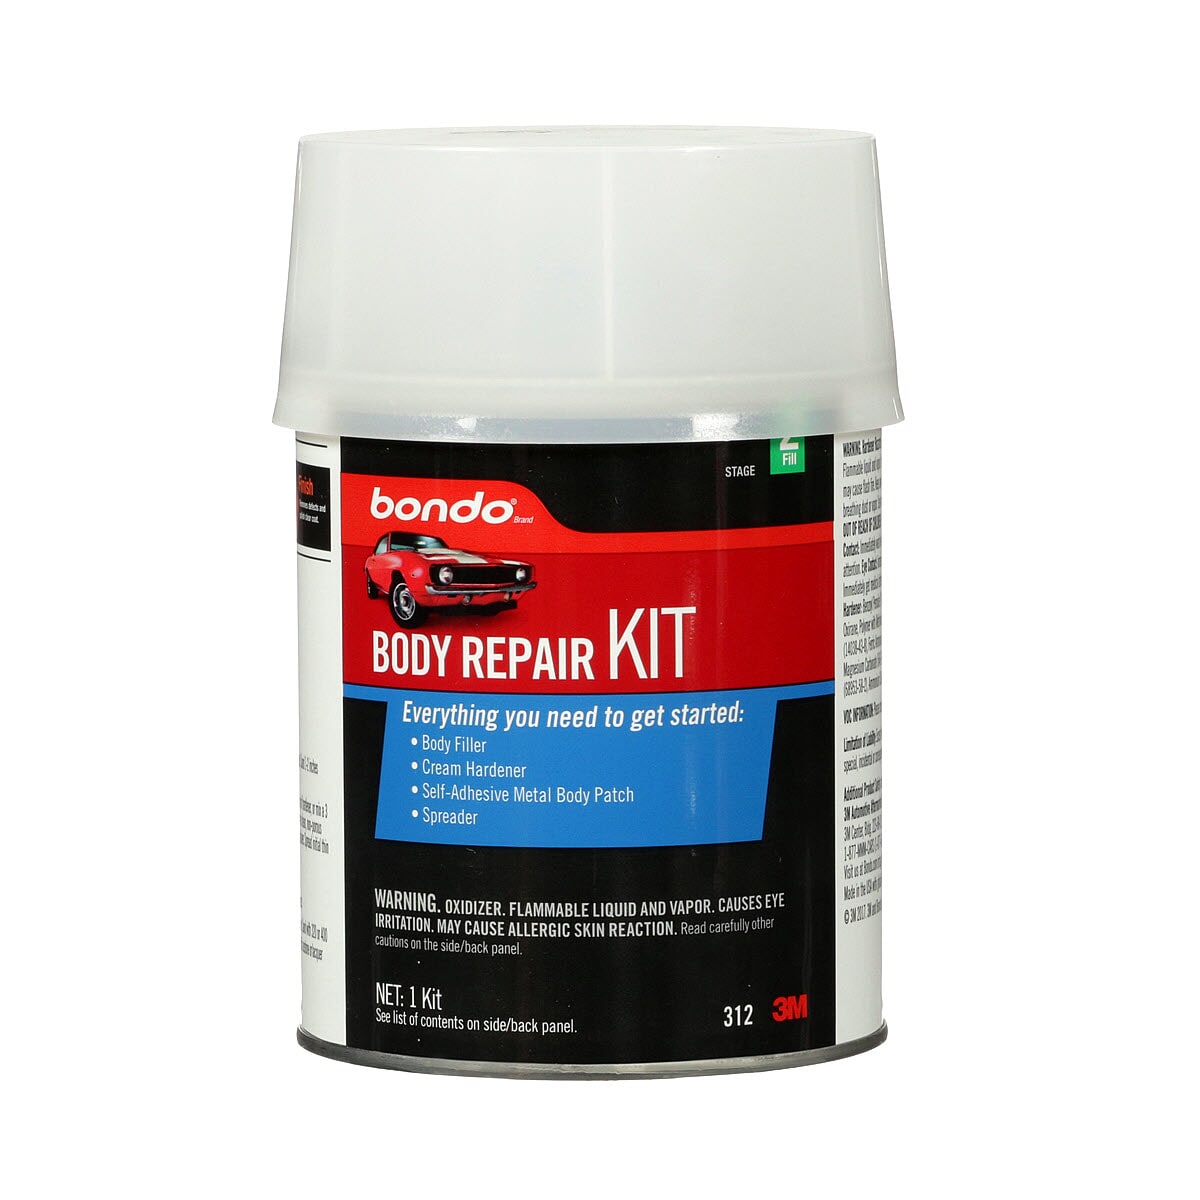 Bondo 7010328125 Body Repair Kit, Can Container, Light Gray/Red, Liquid Form